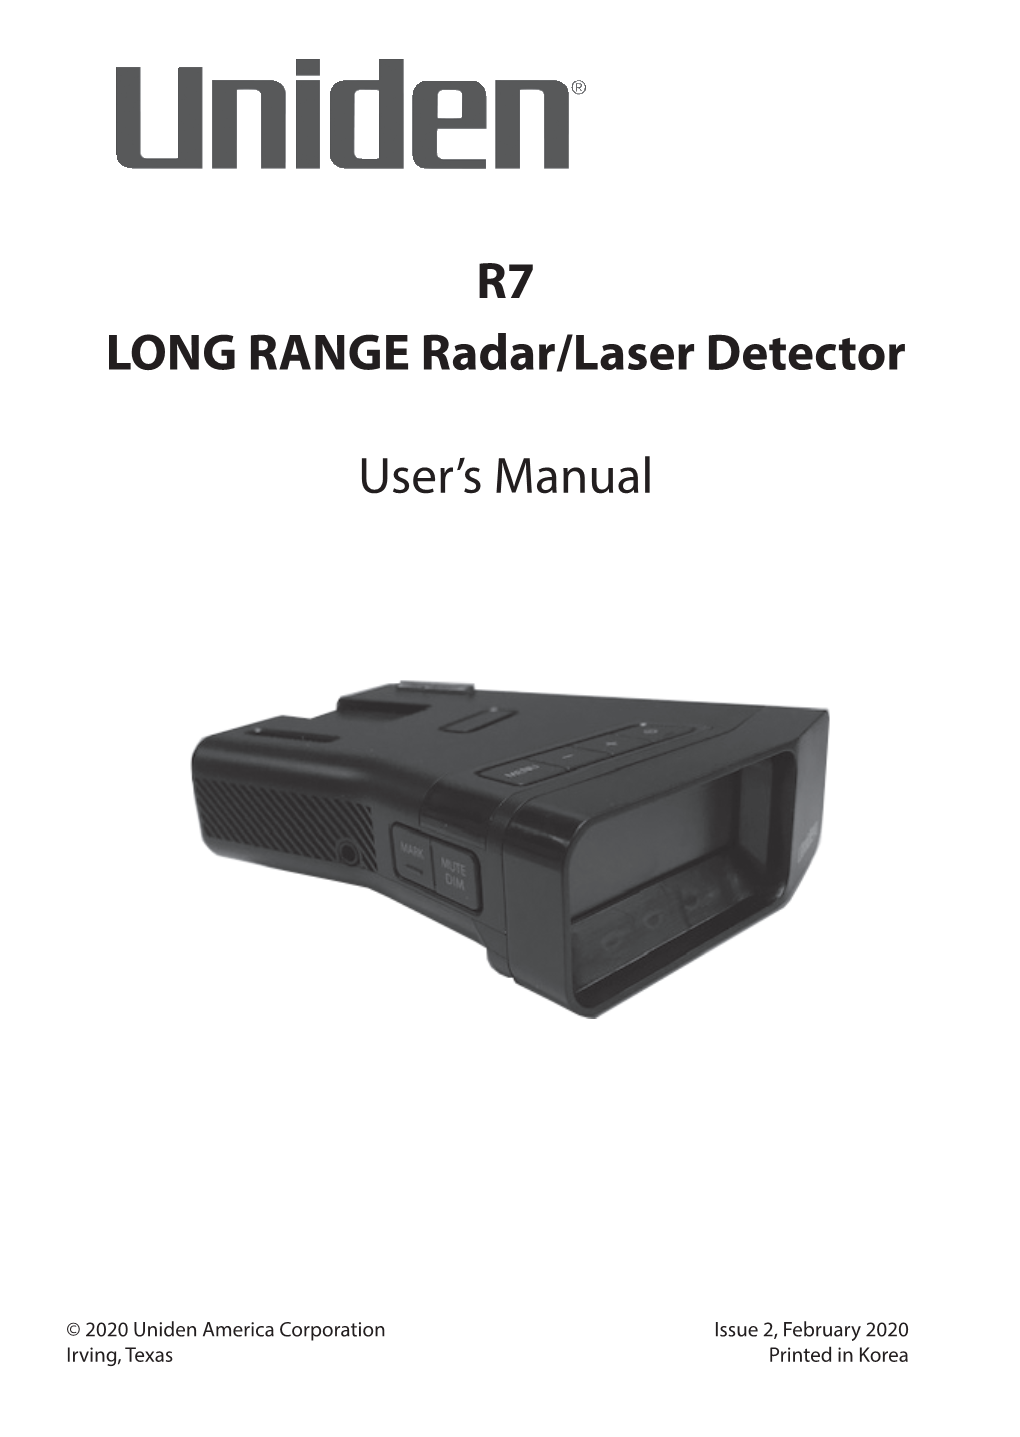 LONG RANGE Radar/Laser Detector User's Manual R7